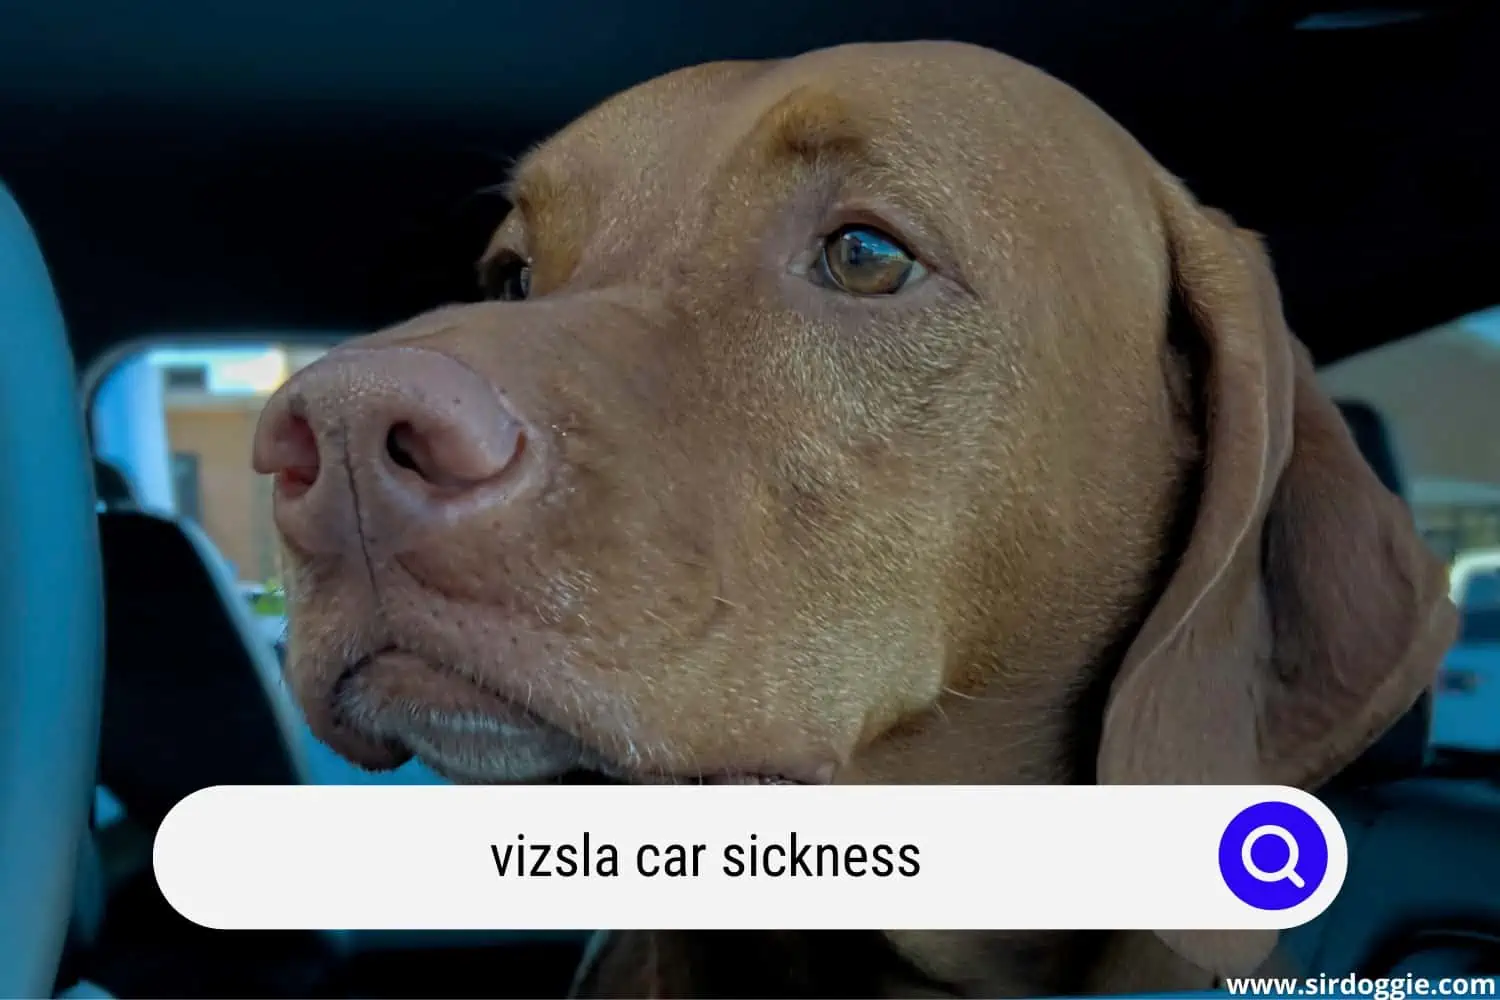 A Vizsla dog experiencing car sickness